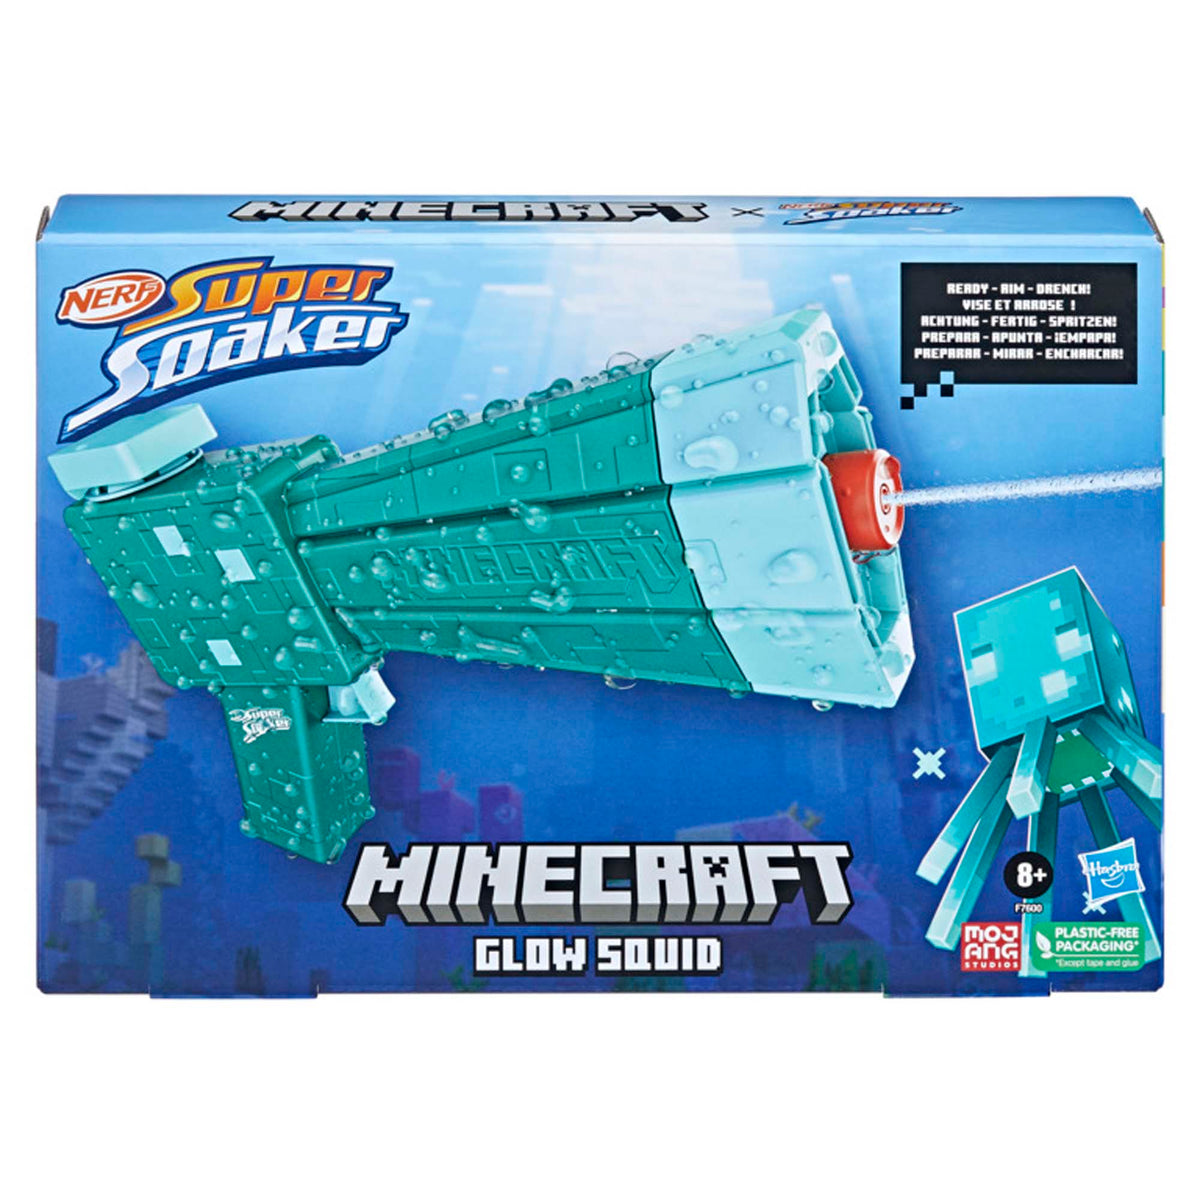 HASBRO Summer Minecraft Nerf Super Soaker Glow Squid, 1 Count